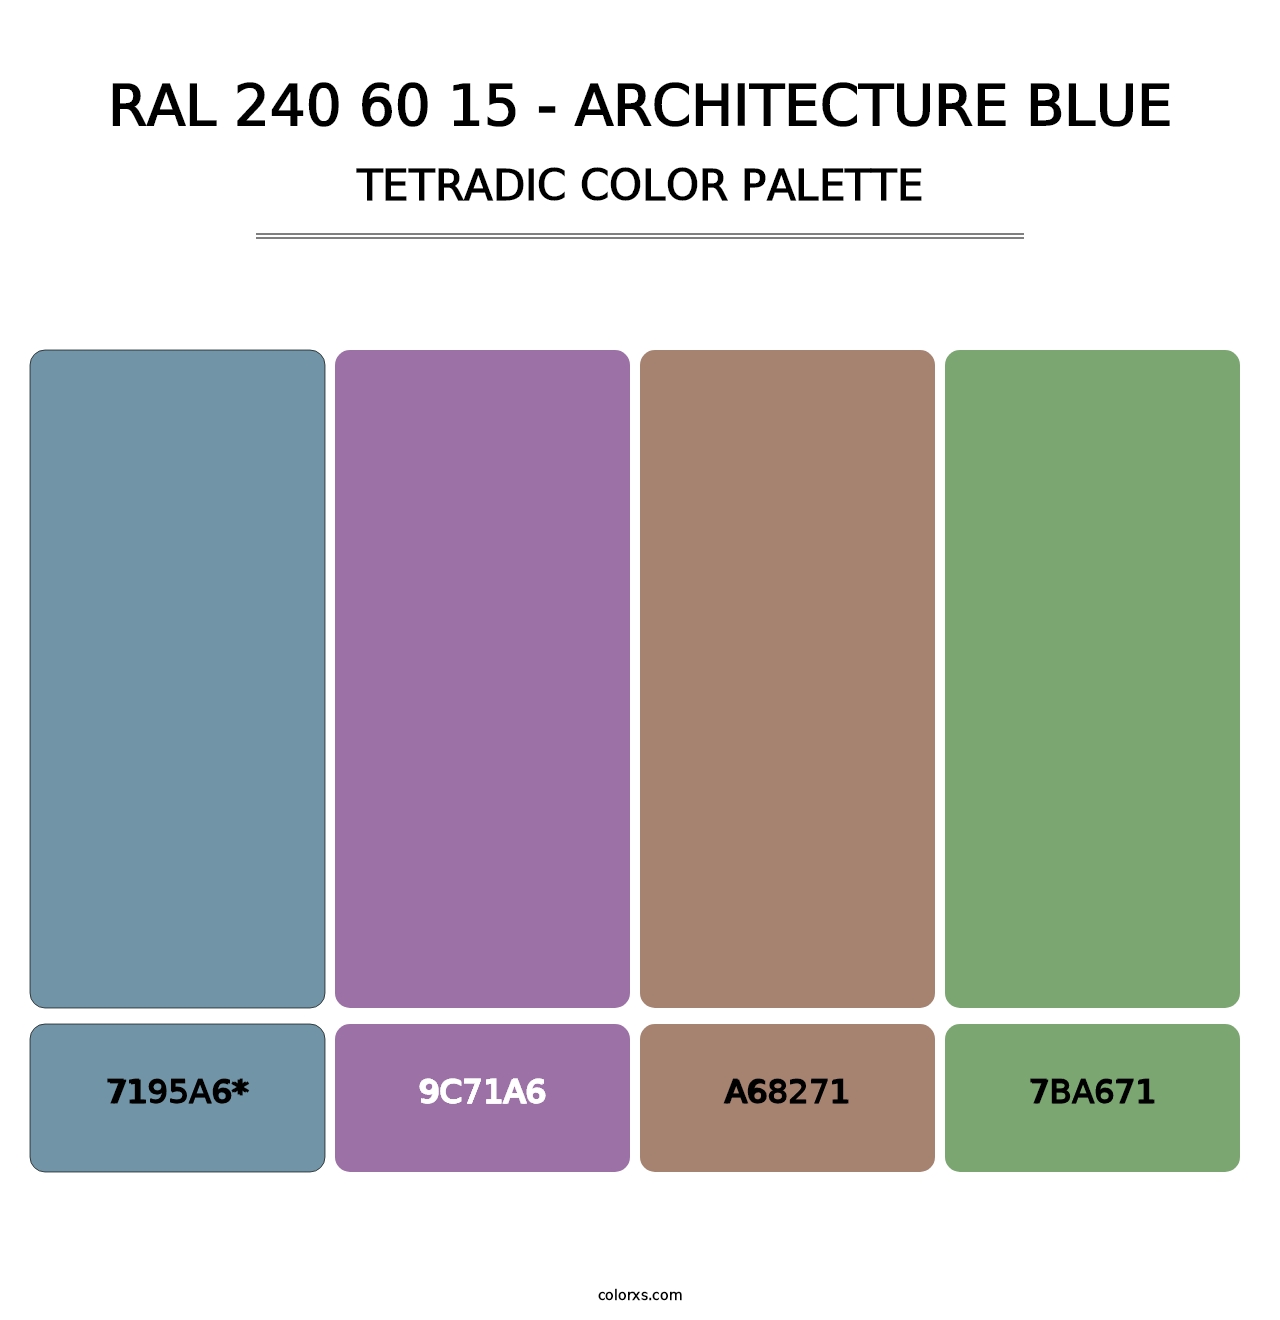 RAL 240 60 15 - Architecture Blue - Tetradic Color Palette